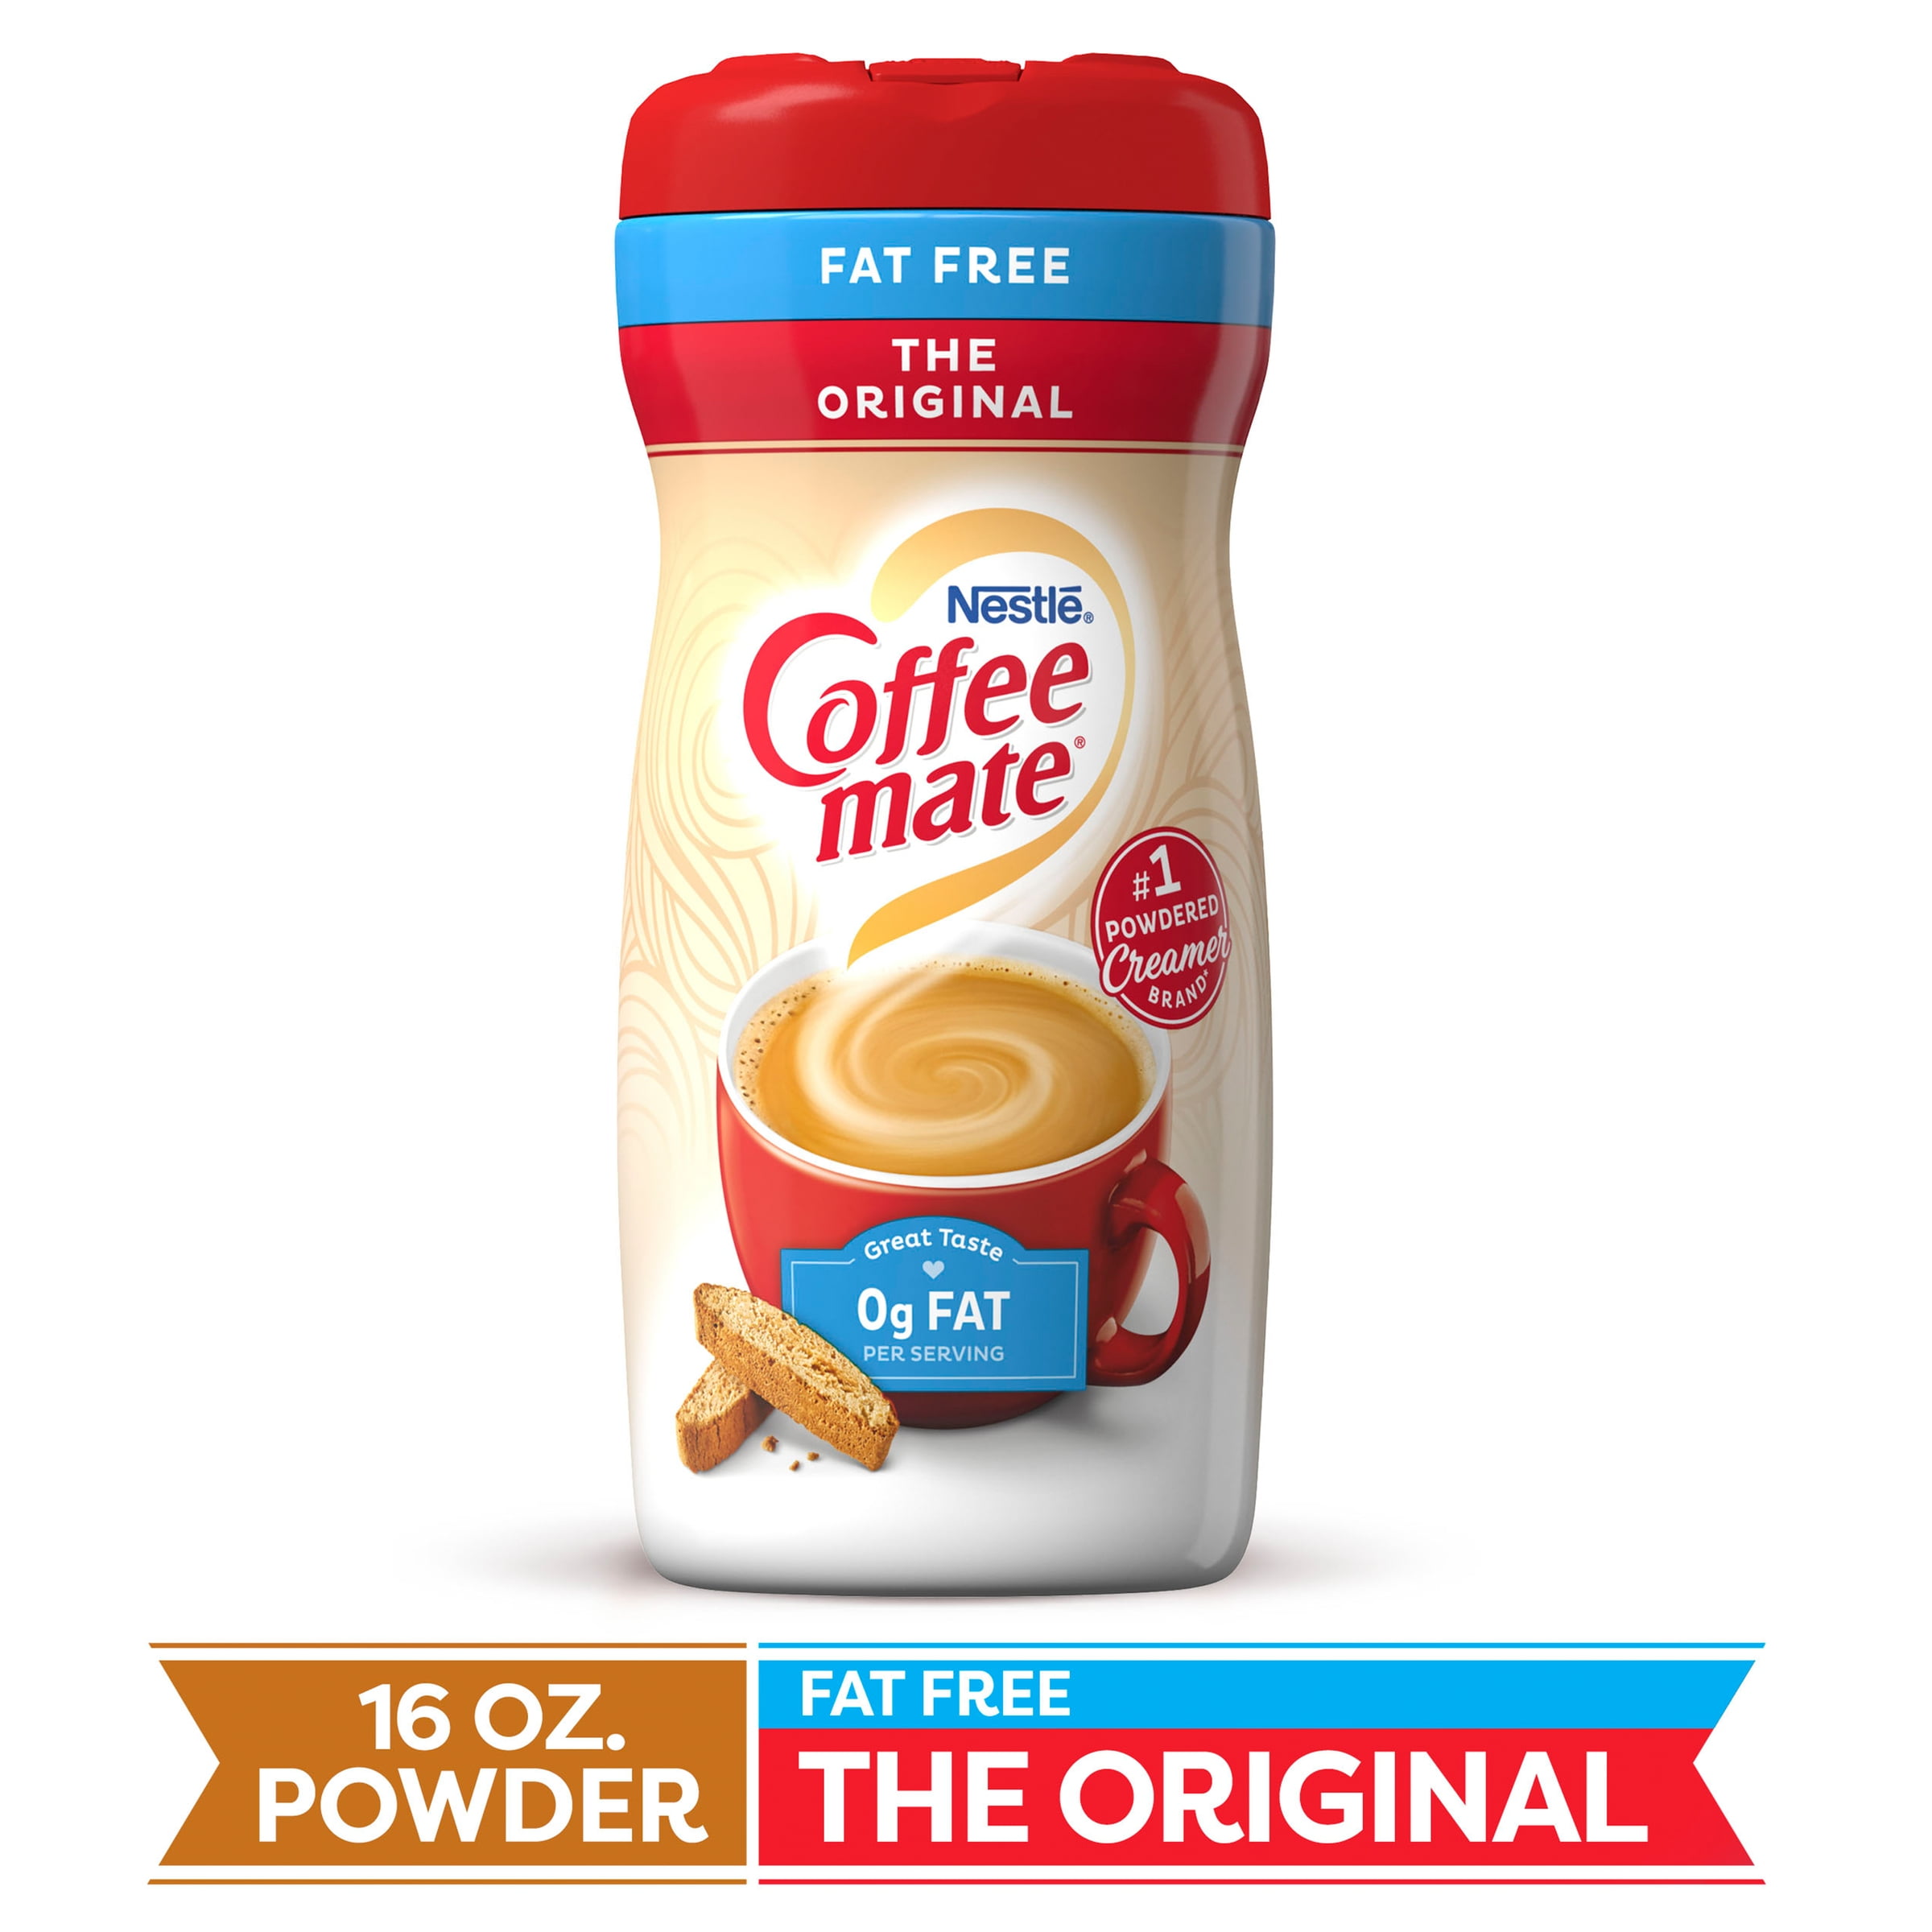 COFFEE MATE Fat Free The Original Powder Coffee Creamer